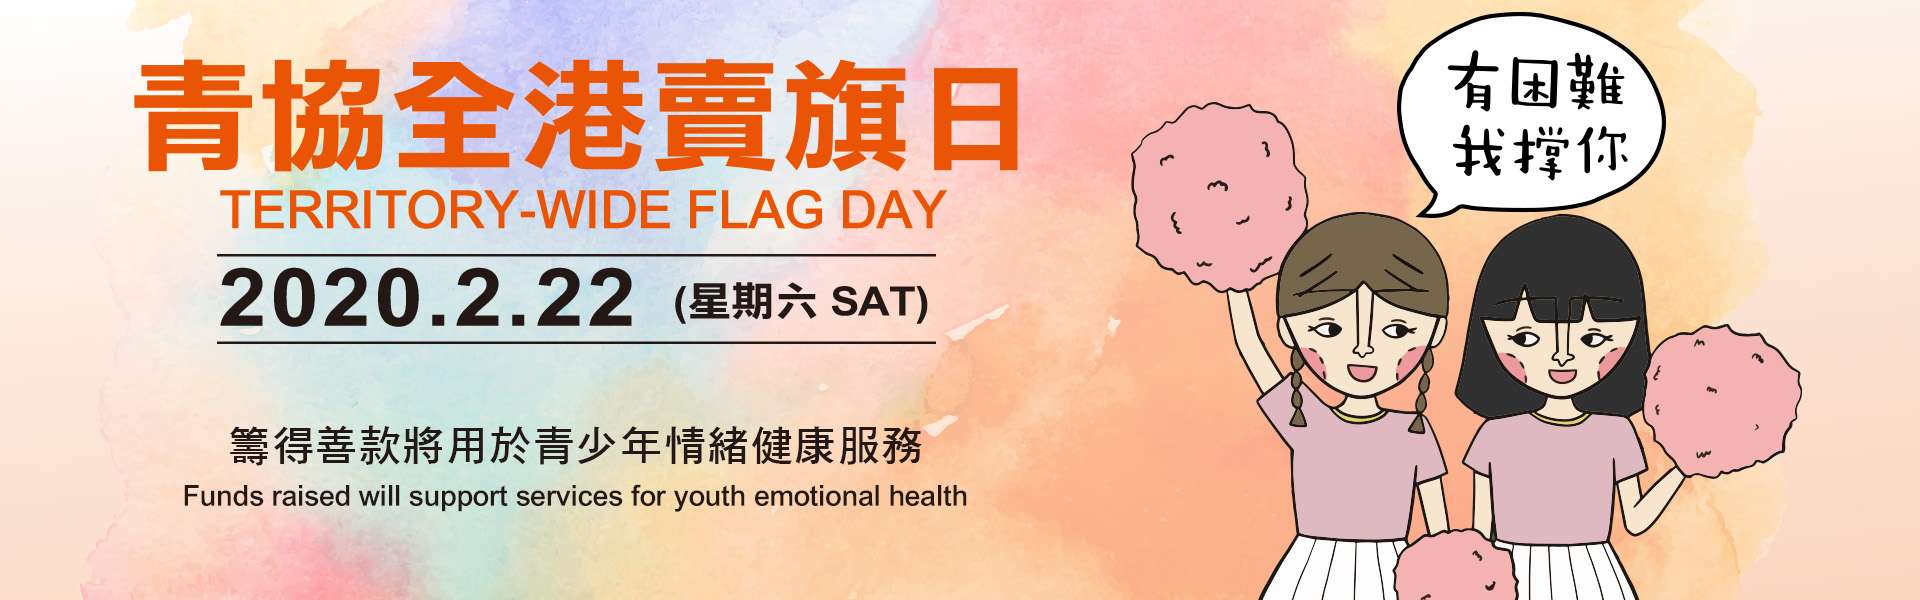 HKFYG Flag Day 2020